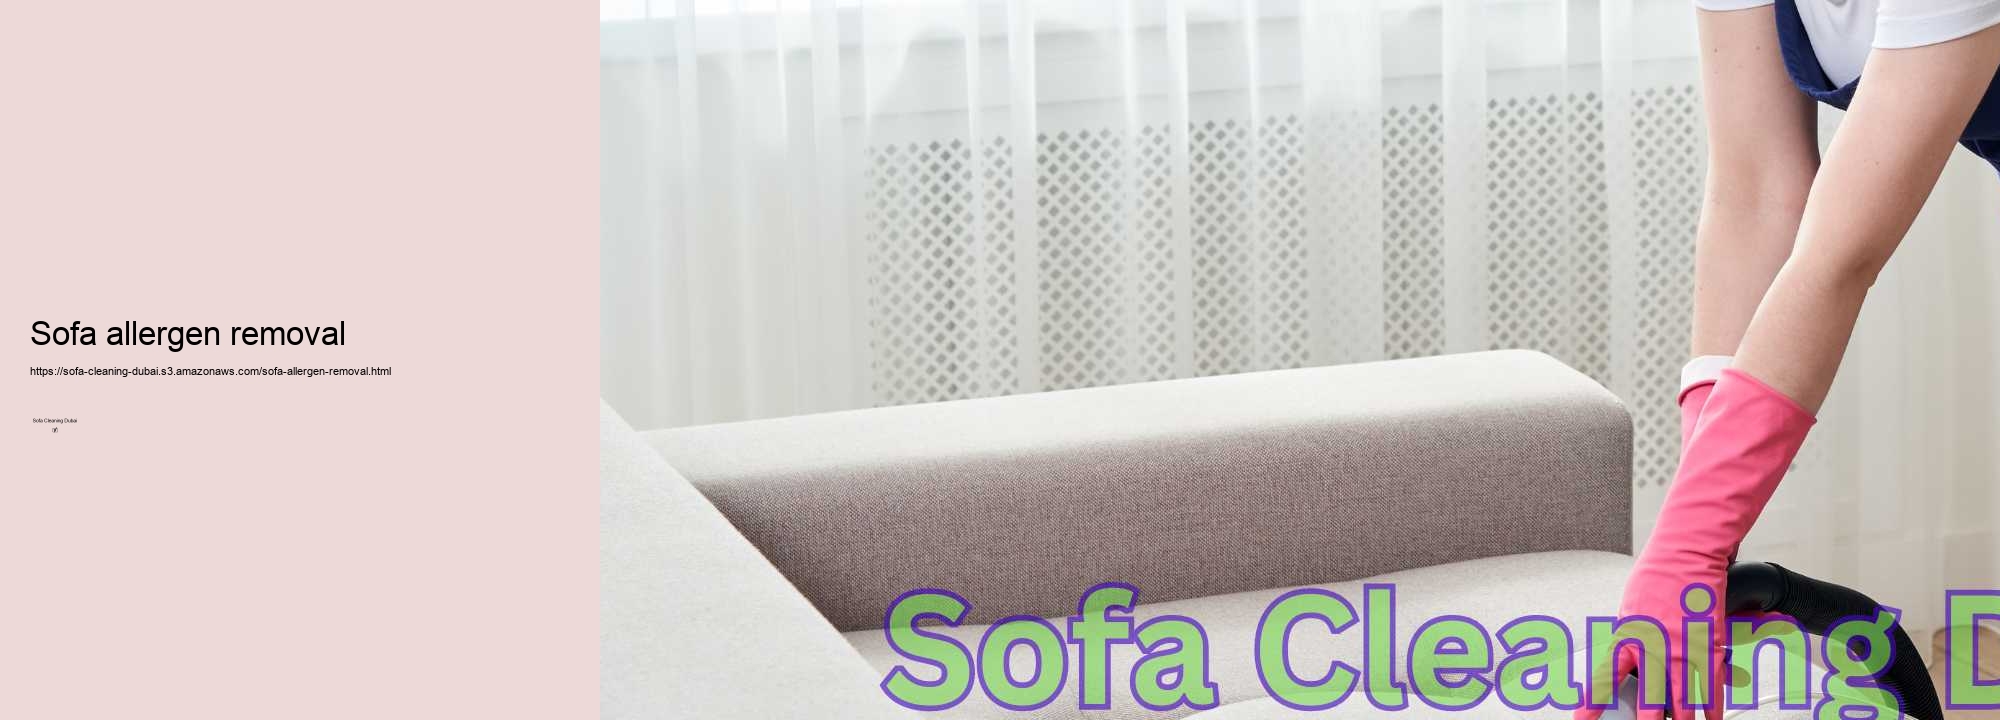 Sofa allergen removal